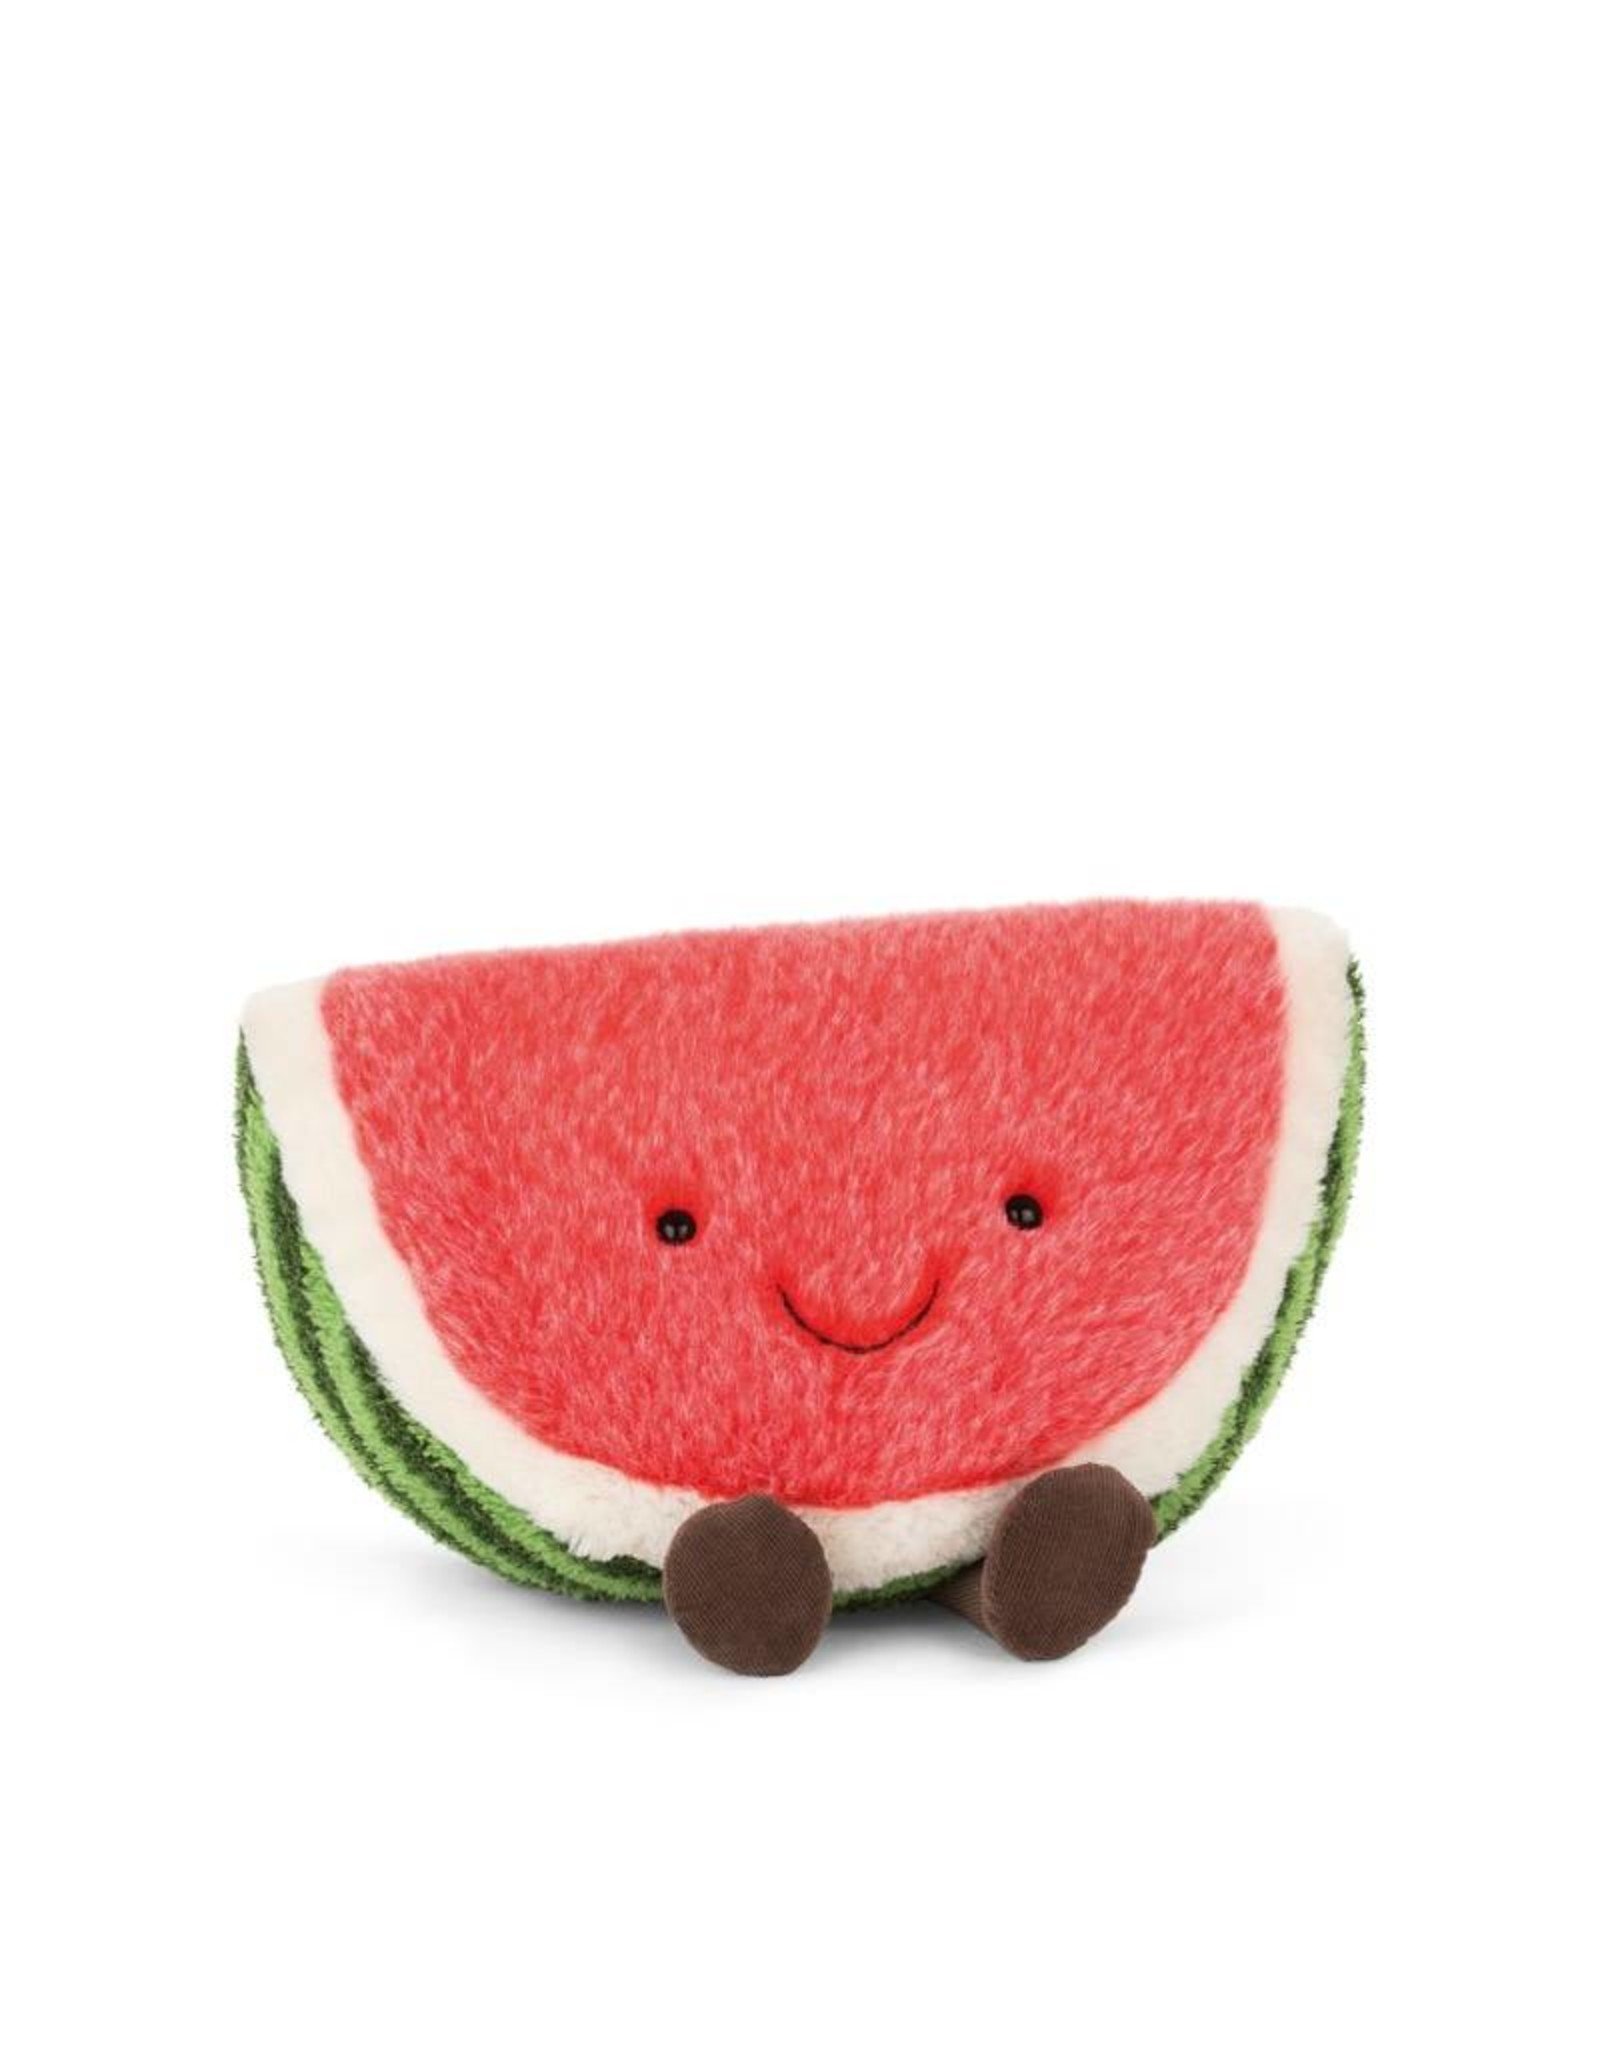 watermelon cat plush